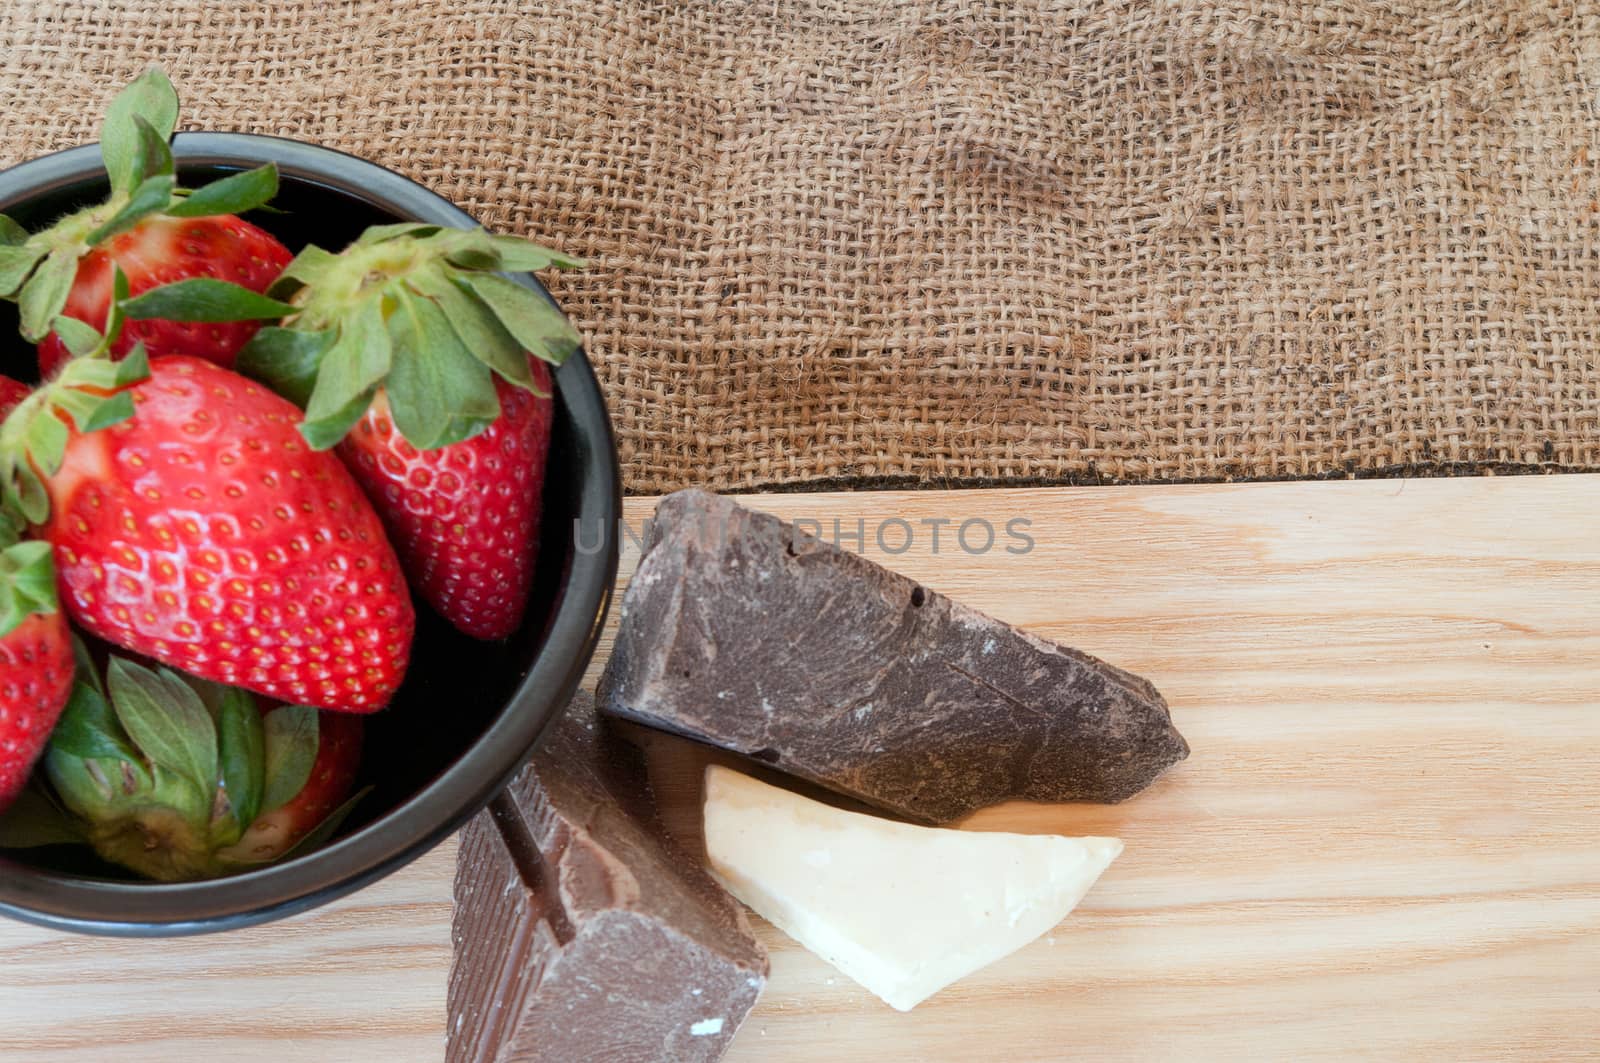 Strawberries and Chocolate by edcorey